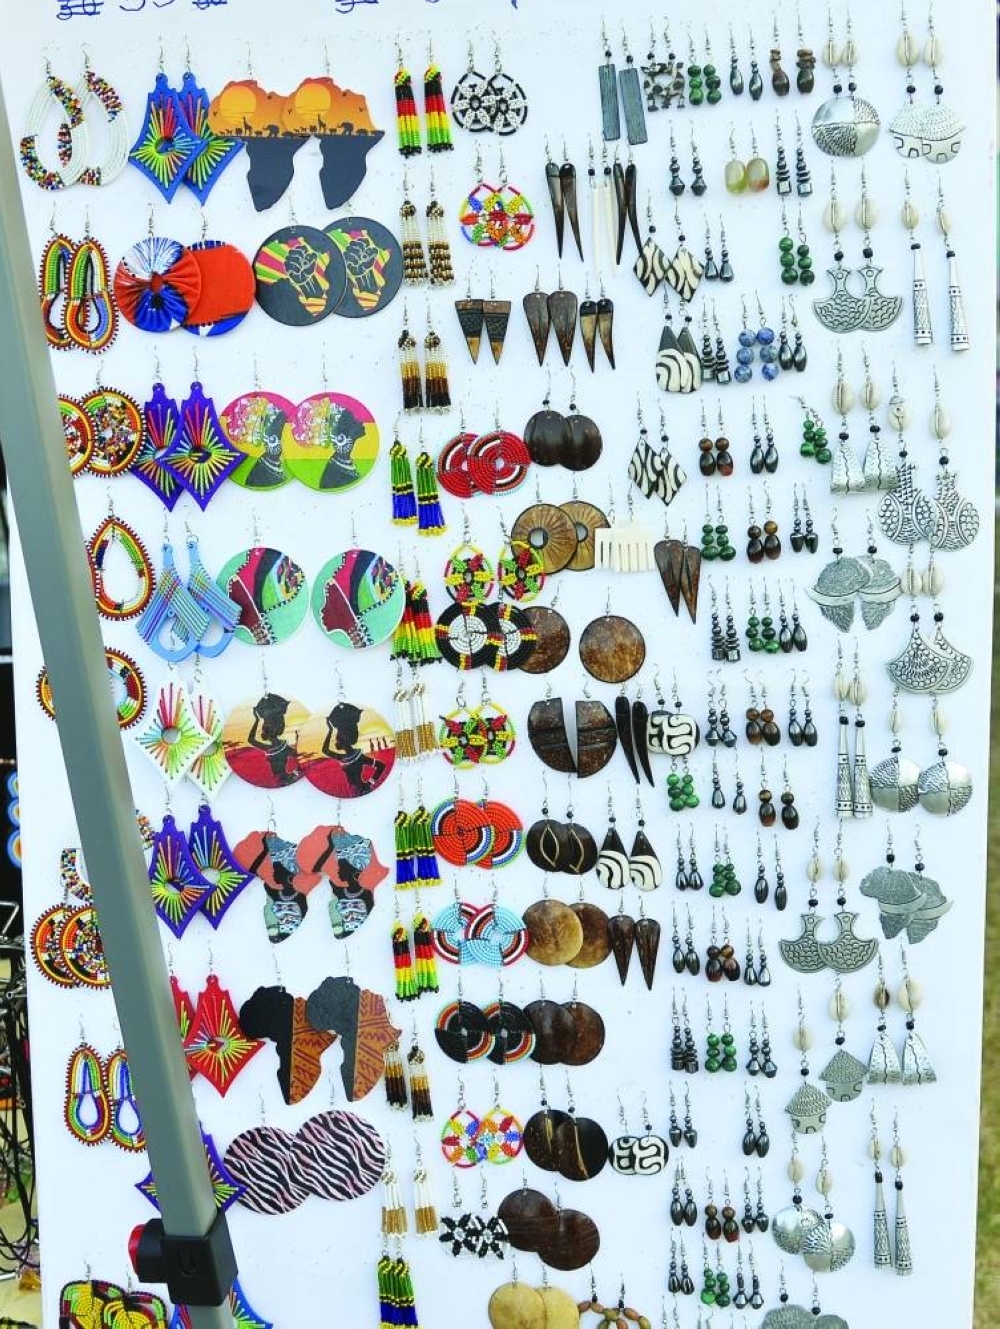 Various ornaments on display. PICTURE: Shaji Kayamkulam